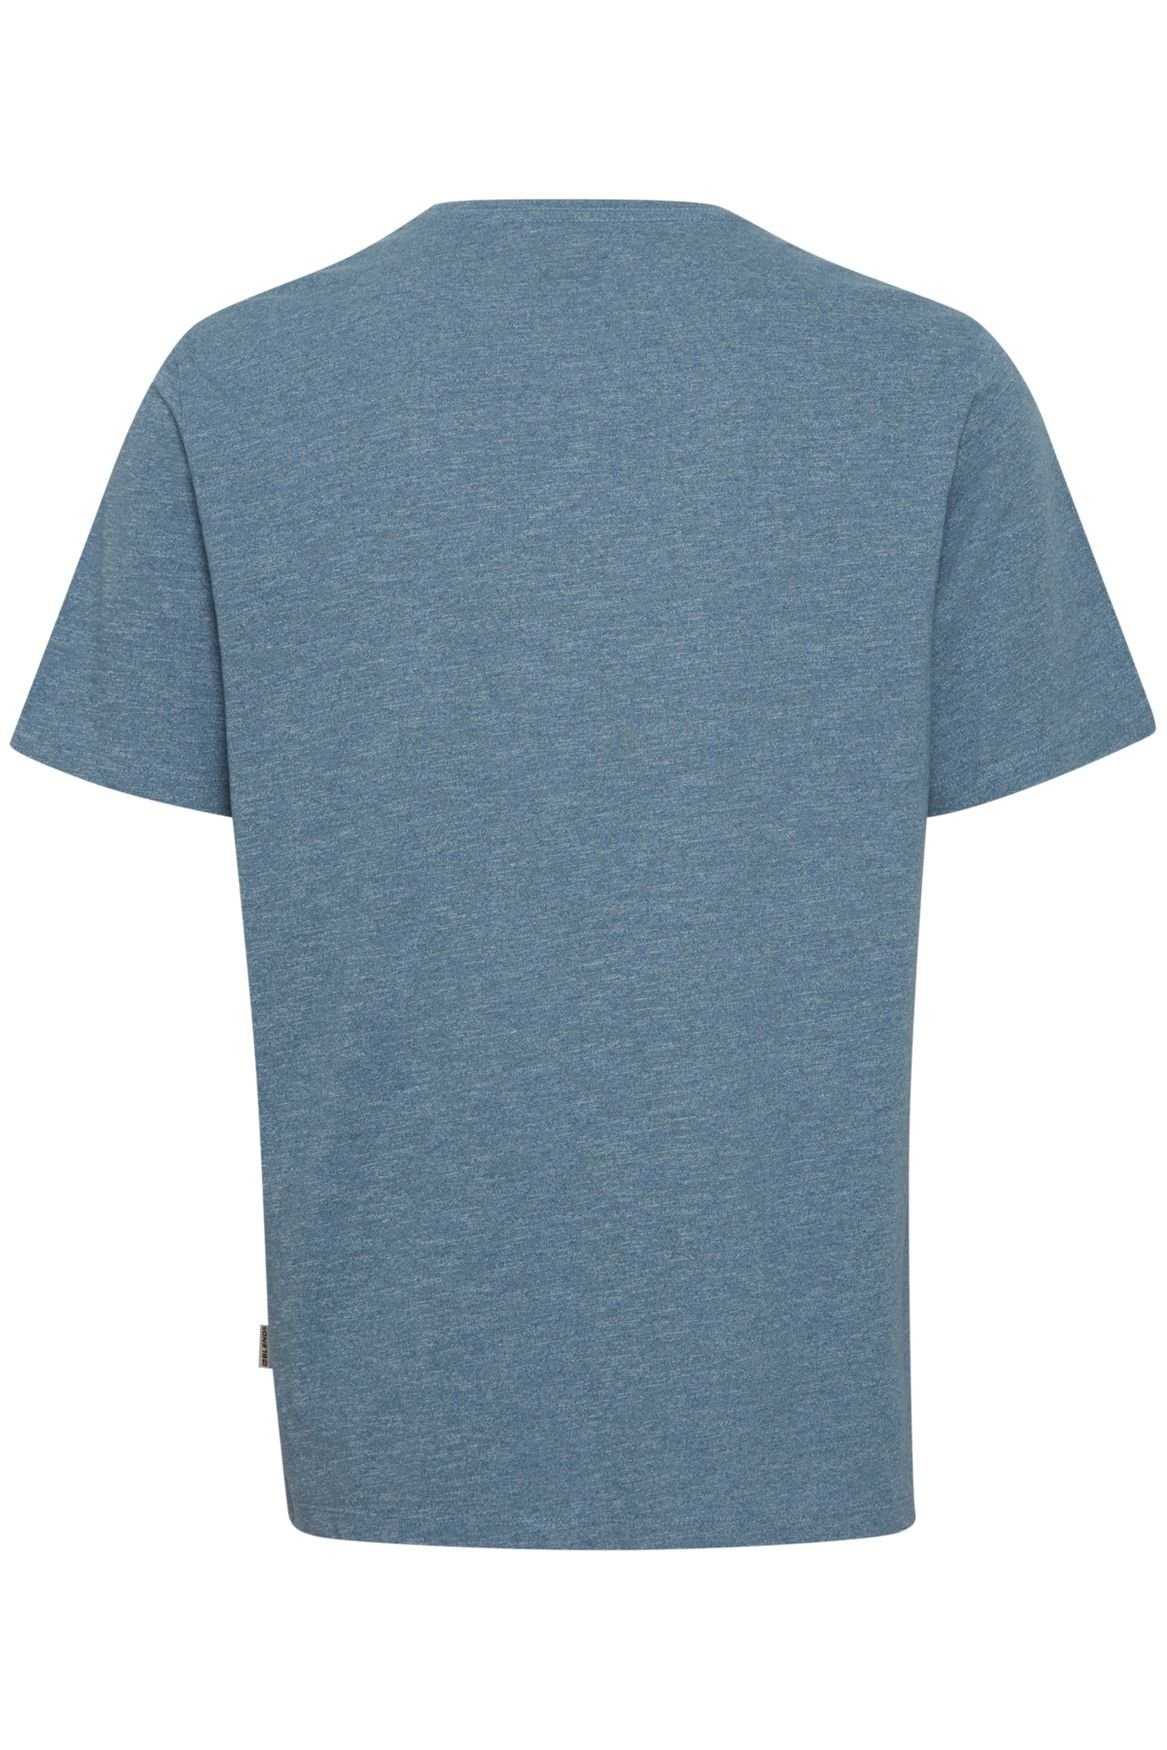 Kurzarm Rundhals Blend BHWilton T-Shirt Blau Shirt in T-Shirt Stretch 5030